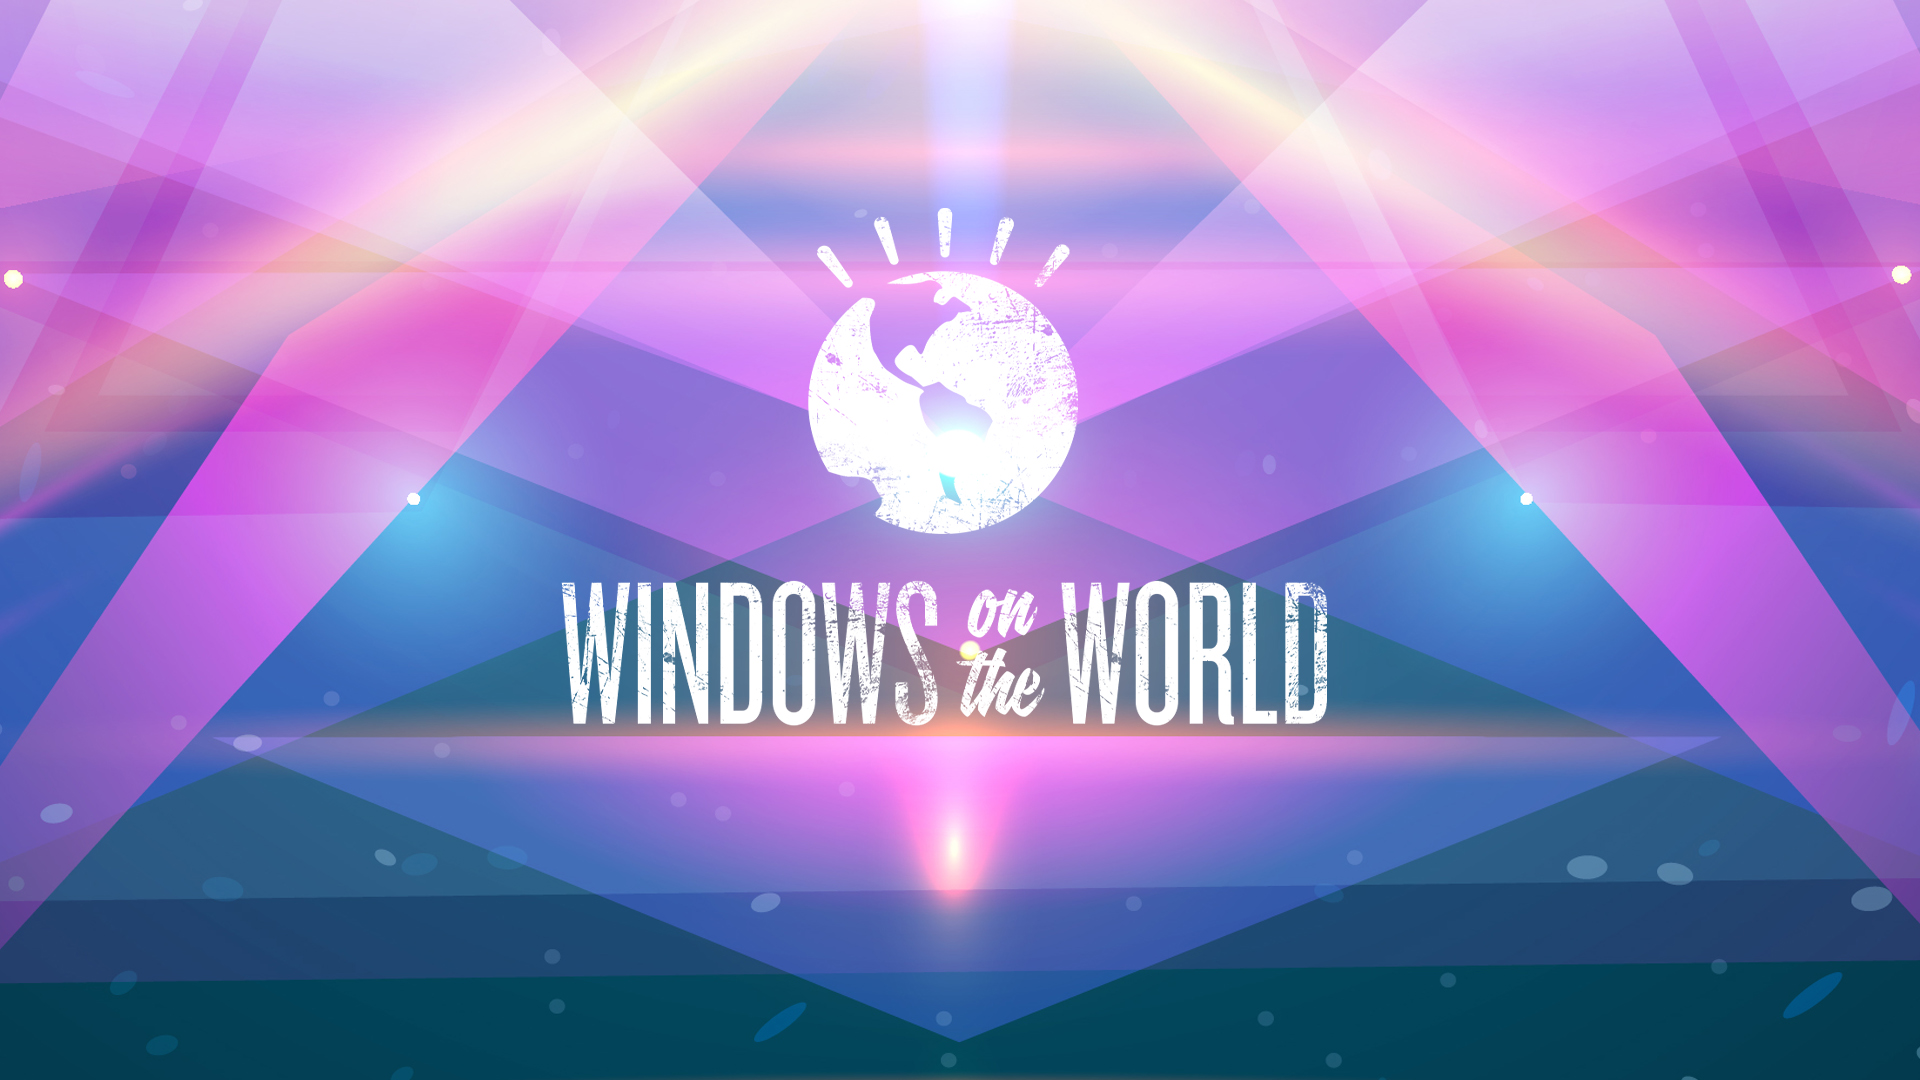 (c) Windowsontheworld.net